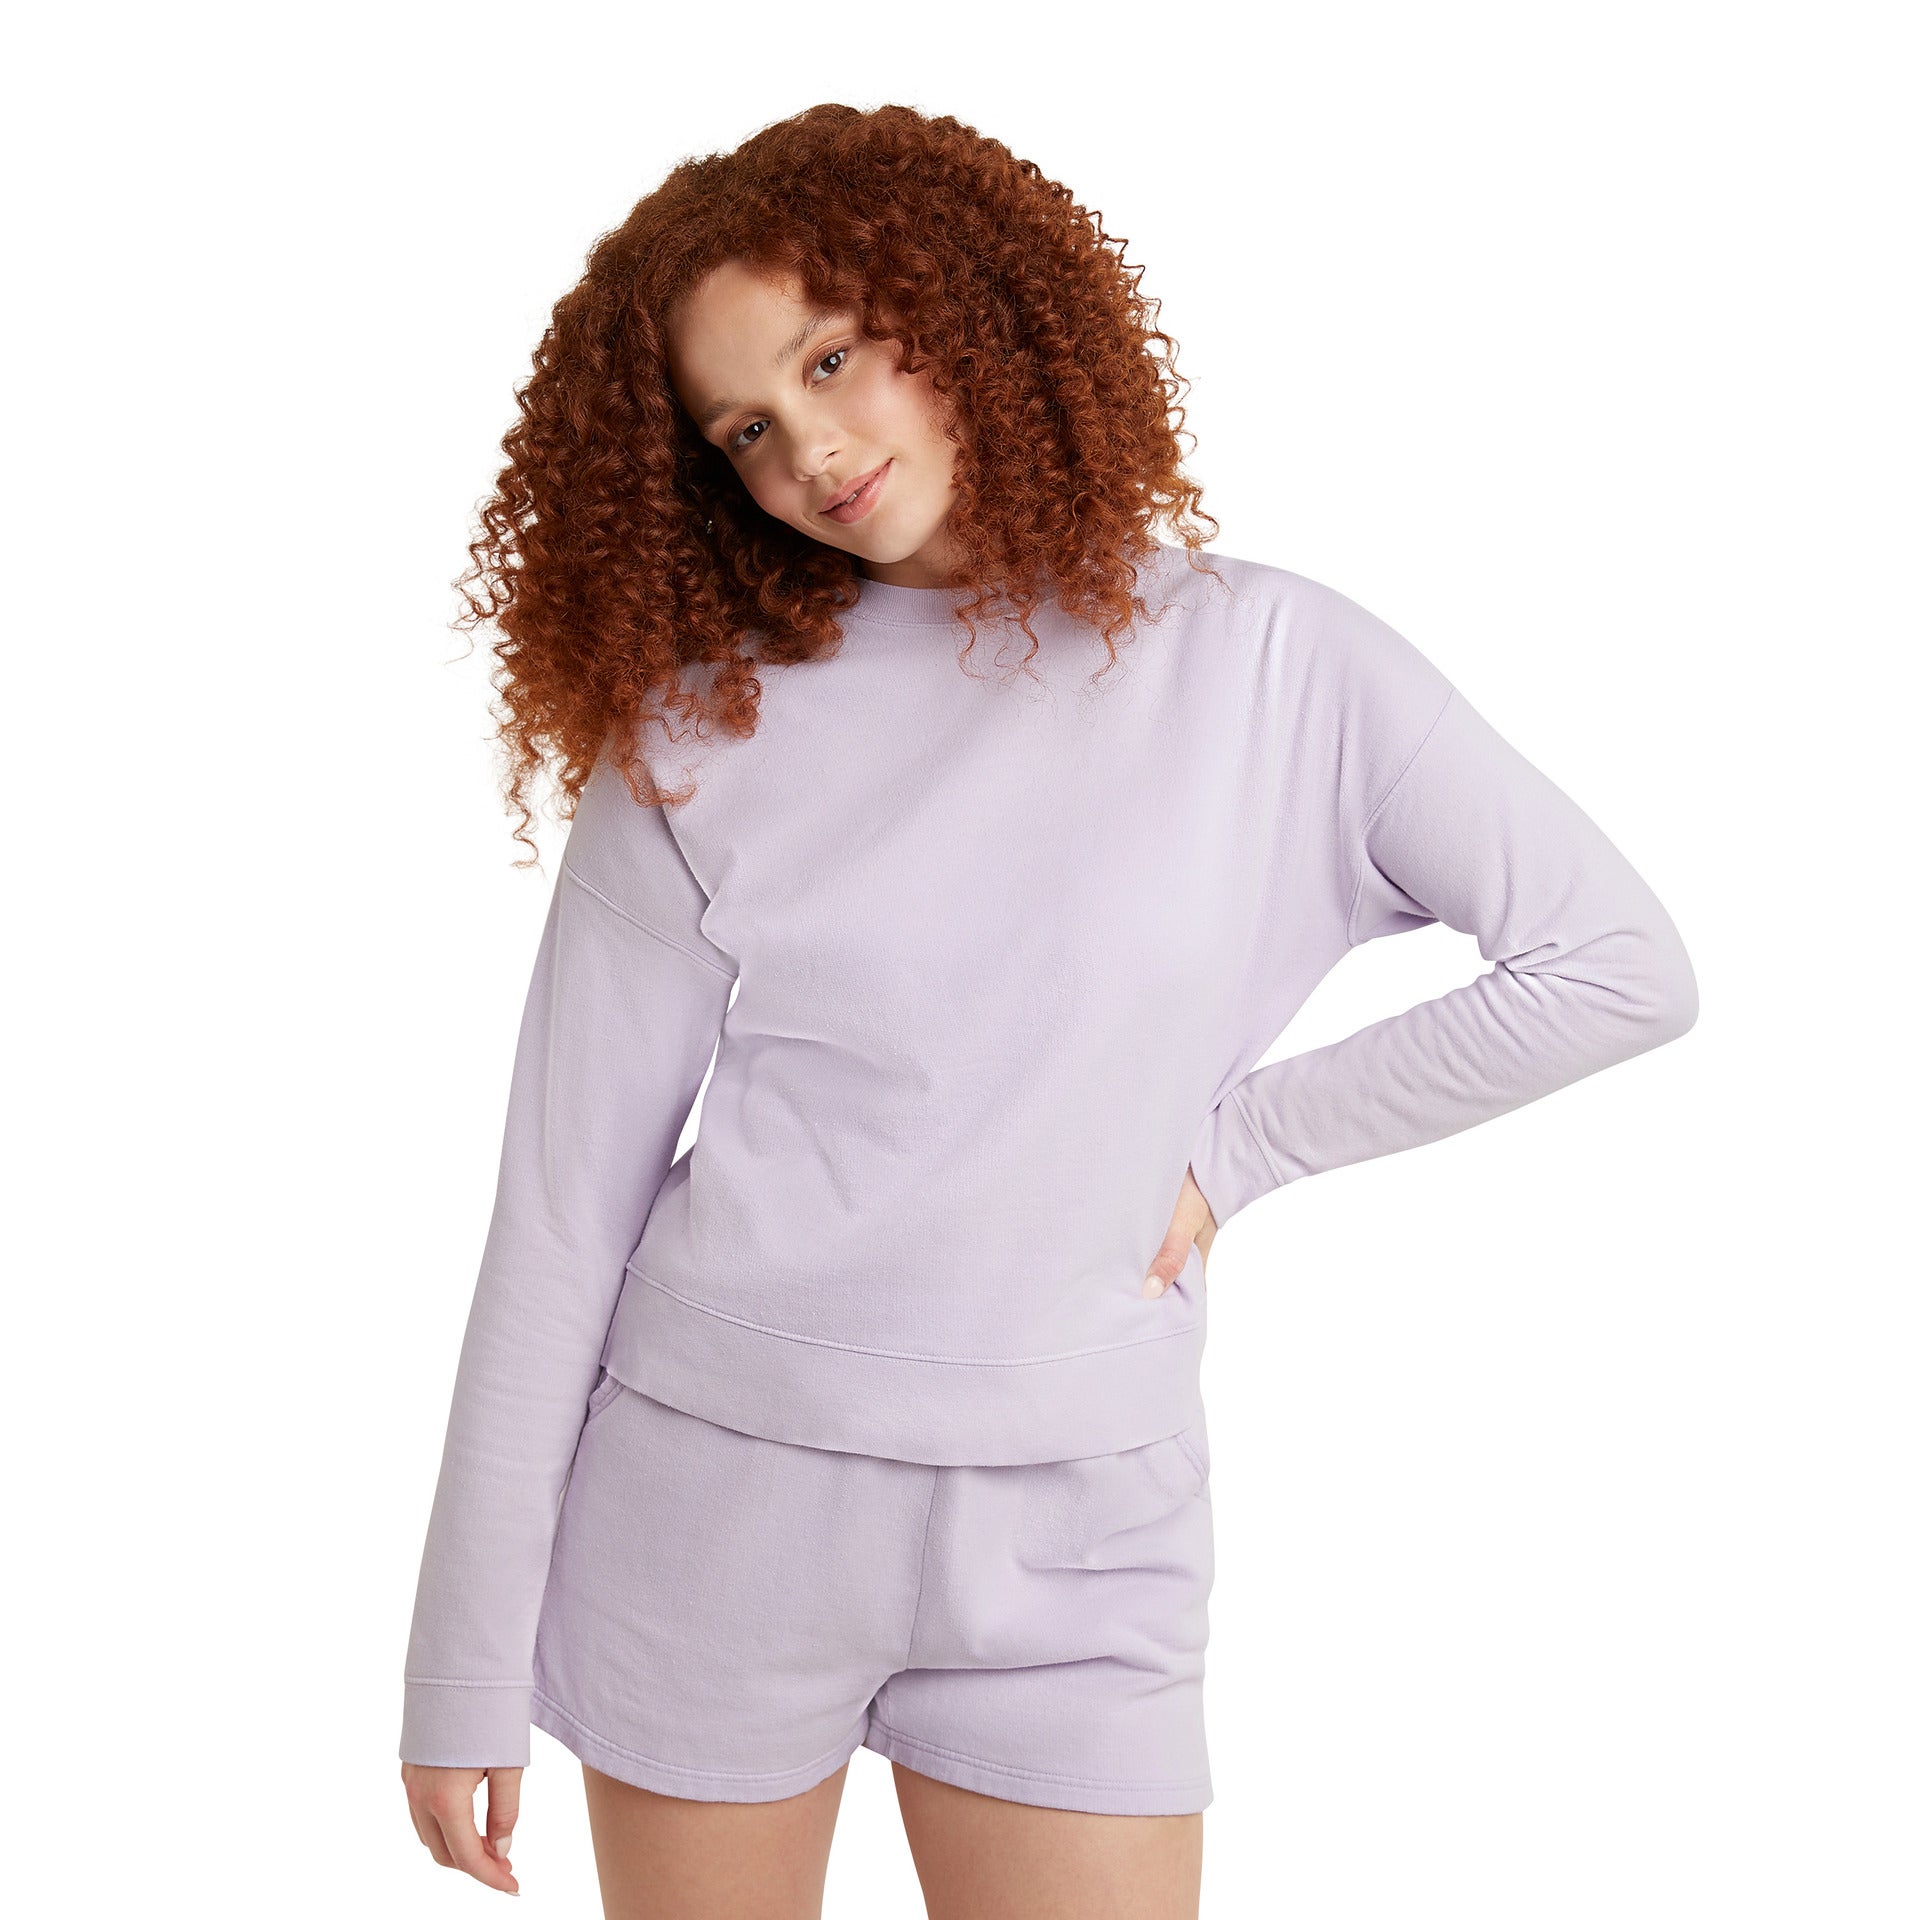 Future lavender sweatshirt